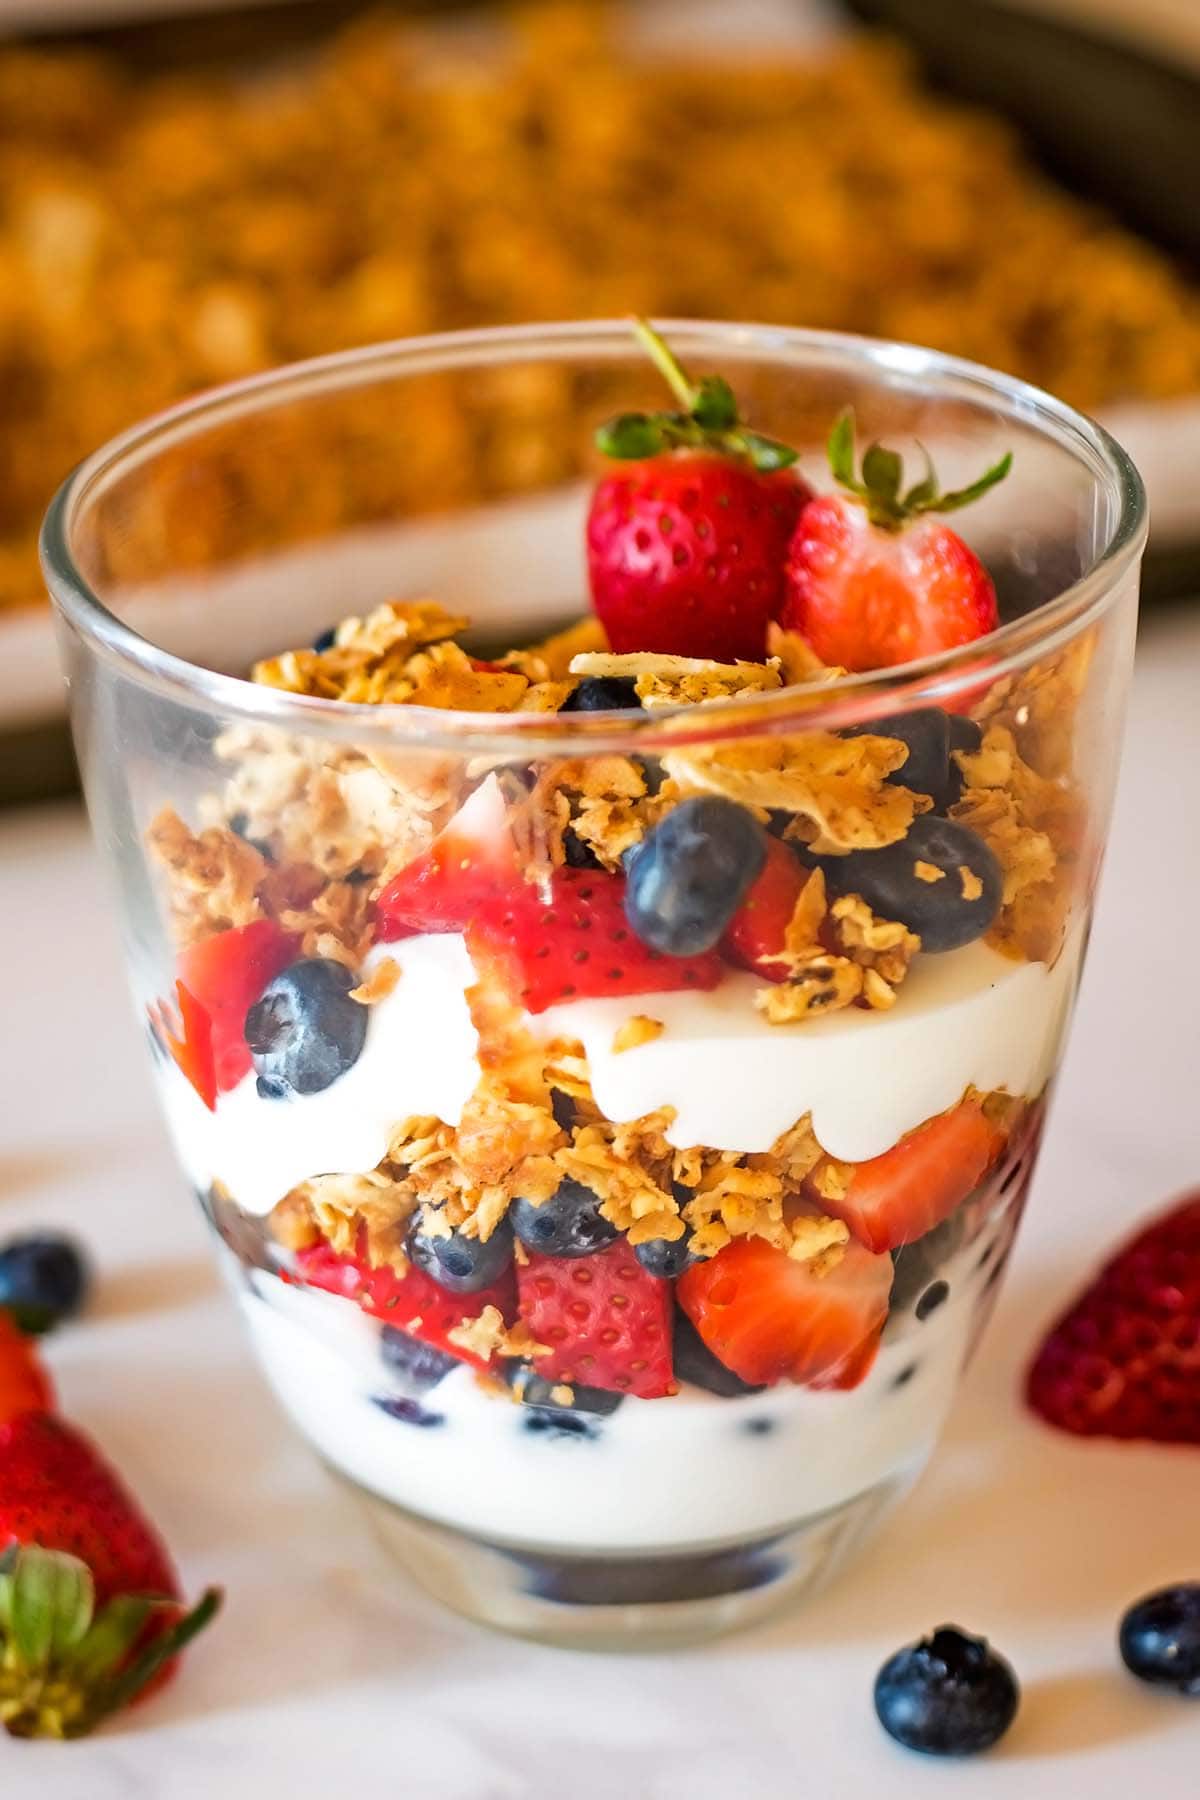 Tigernut granola parfait with layers of yogurt, berries, and granola